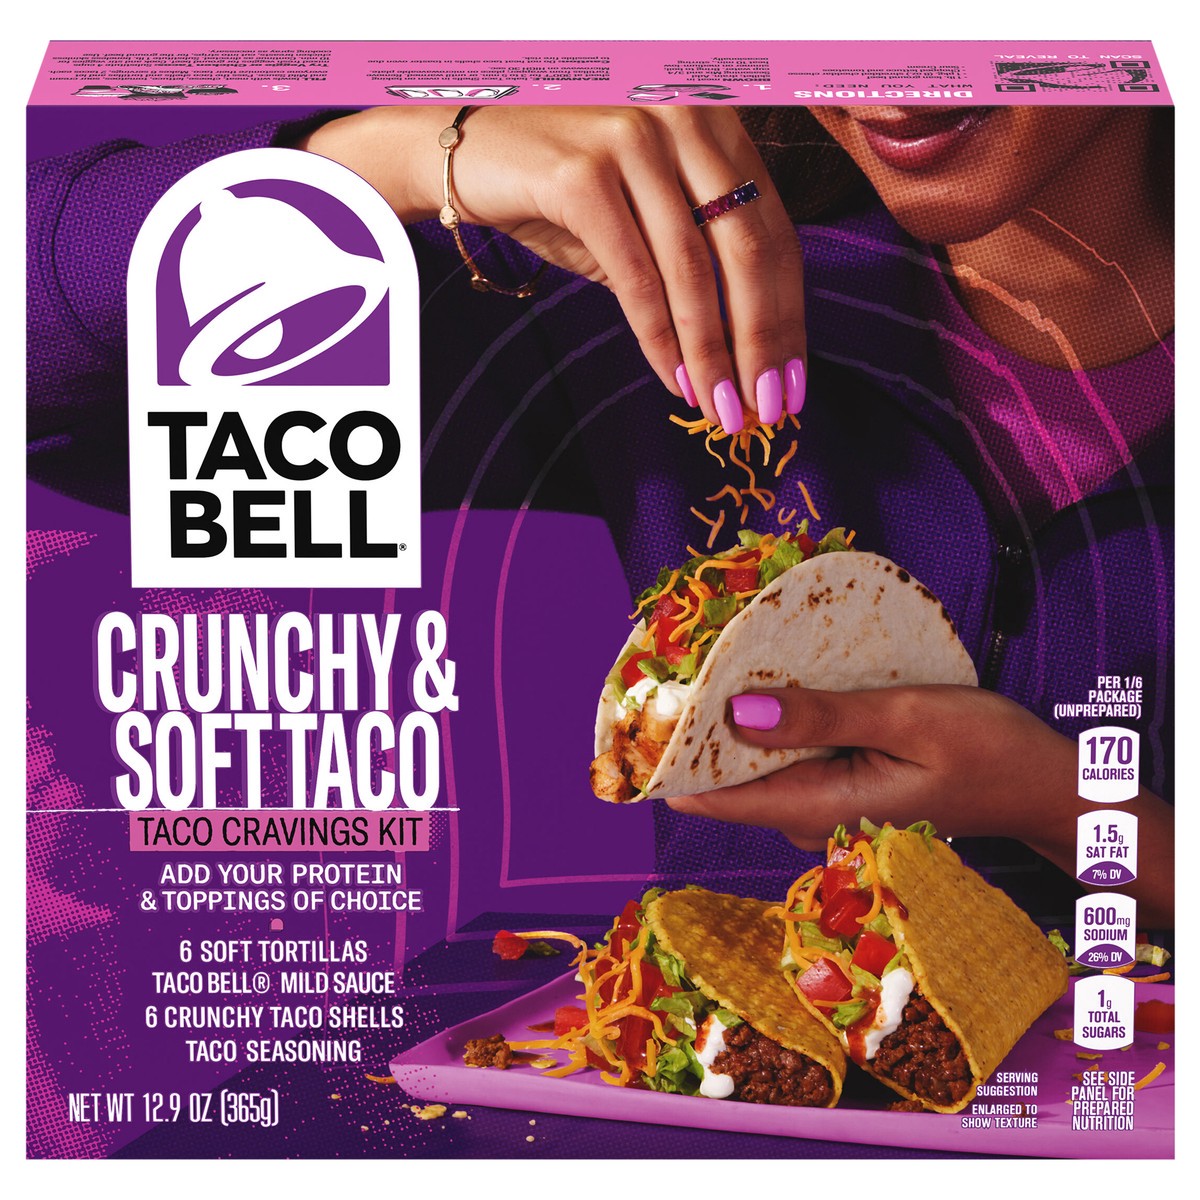 slide 1 of 101, Taco Bell Crunchy & Soft Taco Cravings Kit with 6 Soft Tortillas, 6 Crunchy Taco Shells, Taco Bell Mild Sauce & Seasoning, 12.77 oz Box, 1 ea